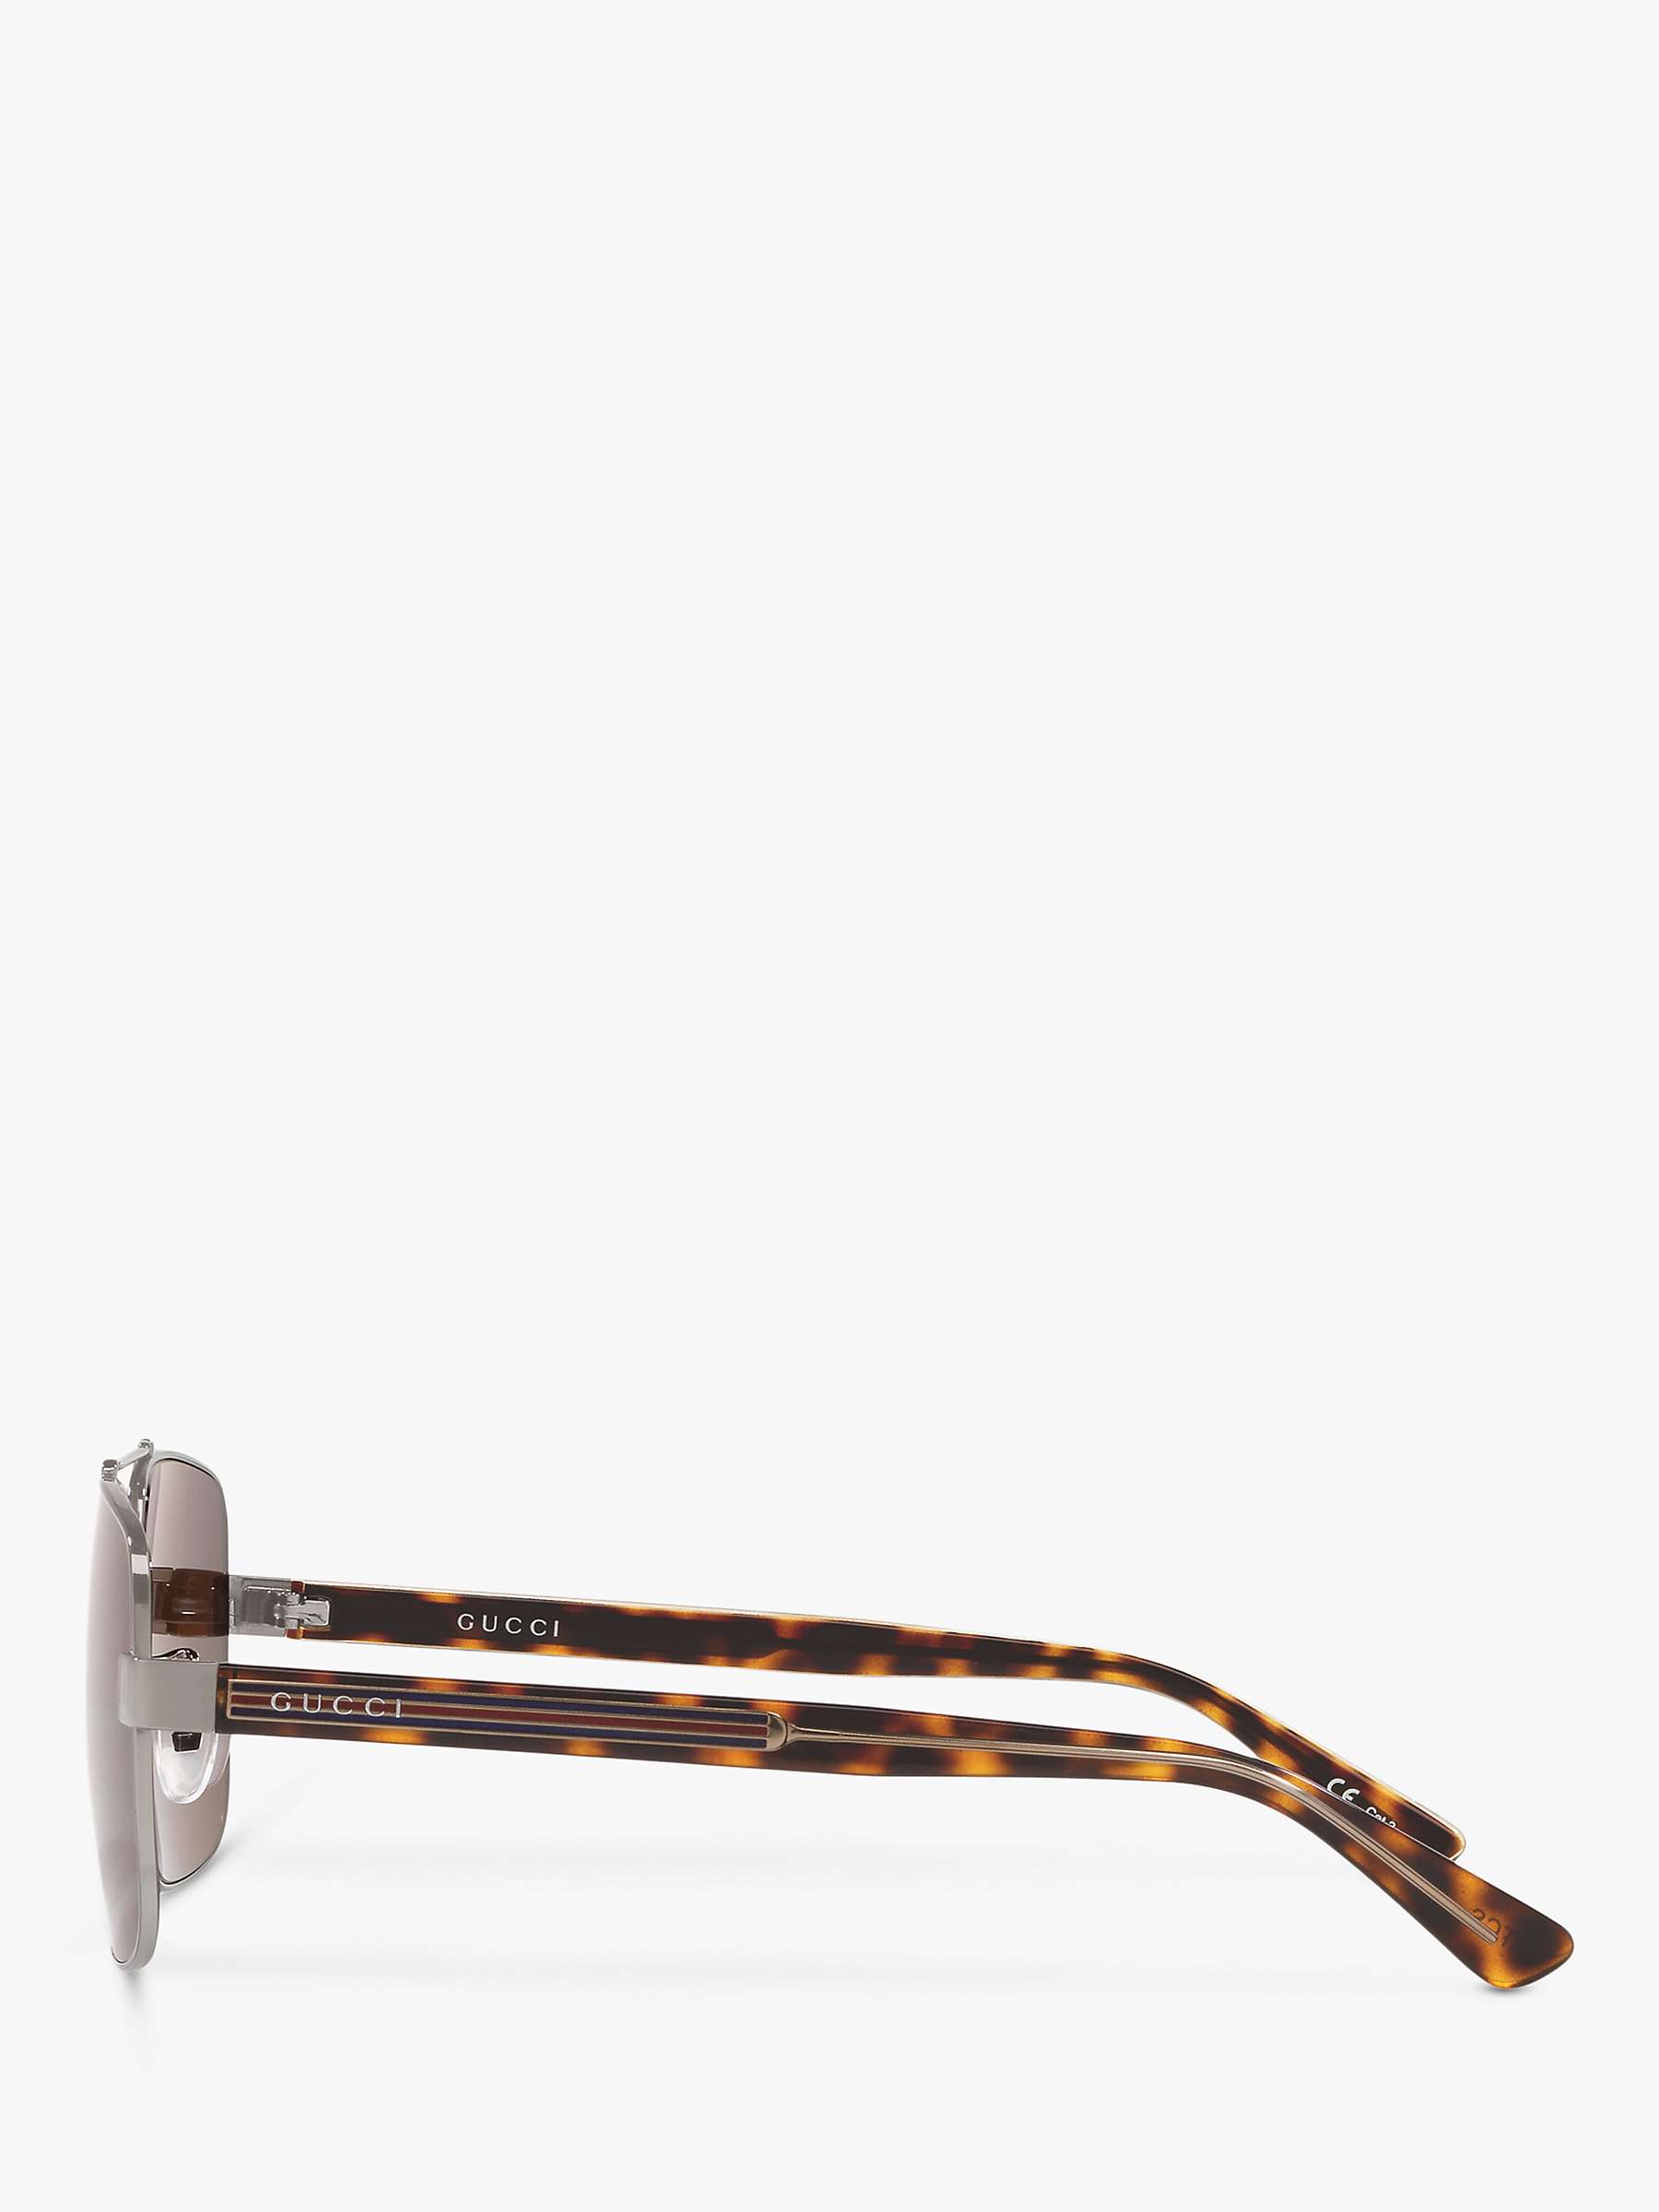 Buy Gucci GC001245 Men's Aviator Sunglasses, Silver/Brown Online at johnlewis.com